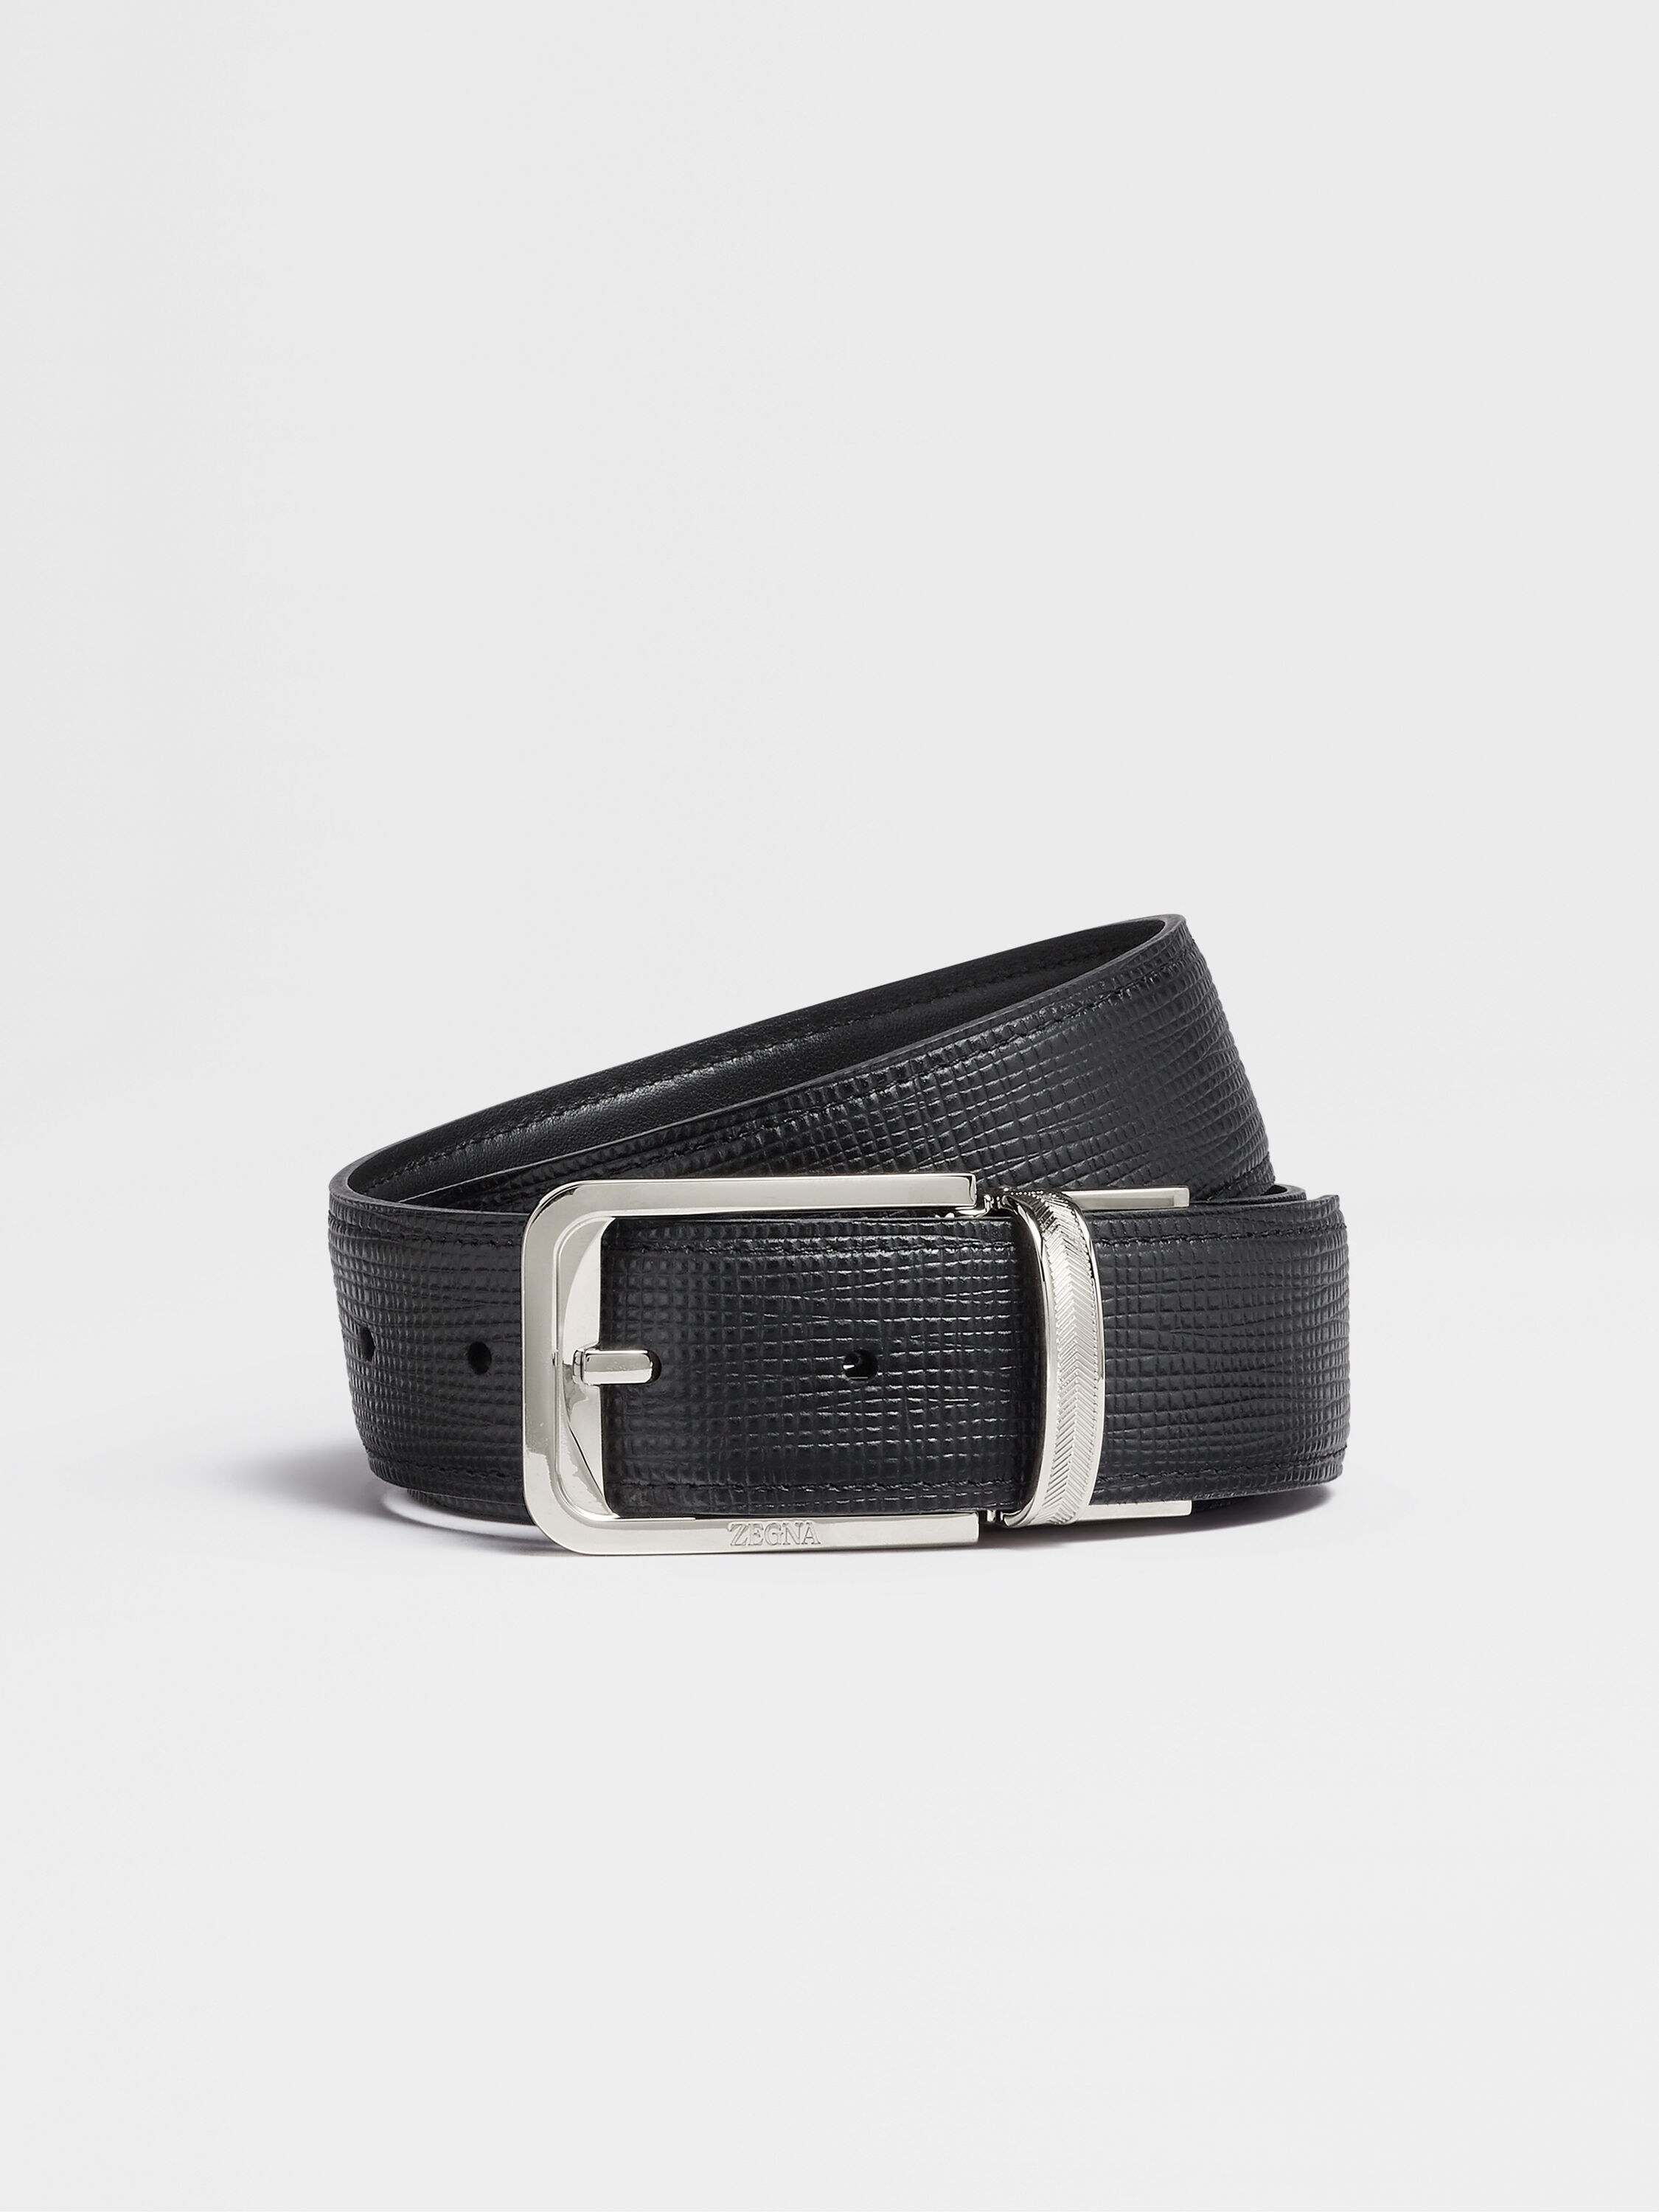 Zegna Reversible Leather Buckle Belt, Belts